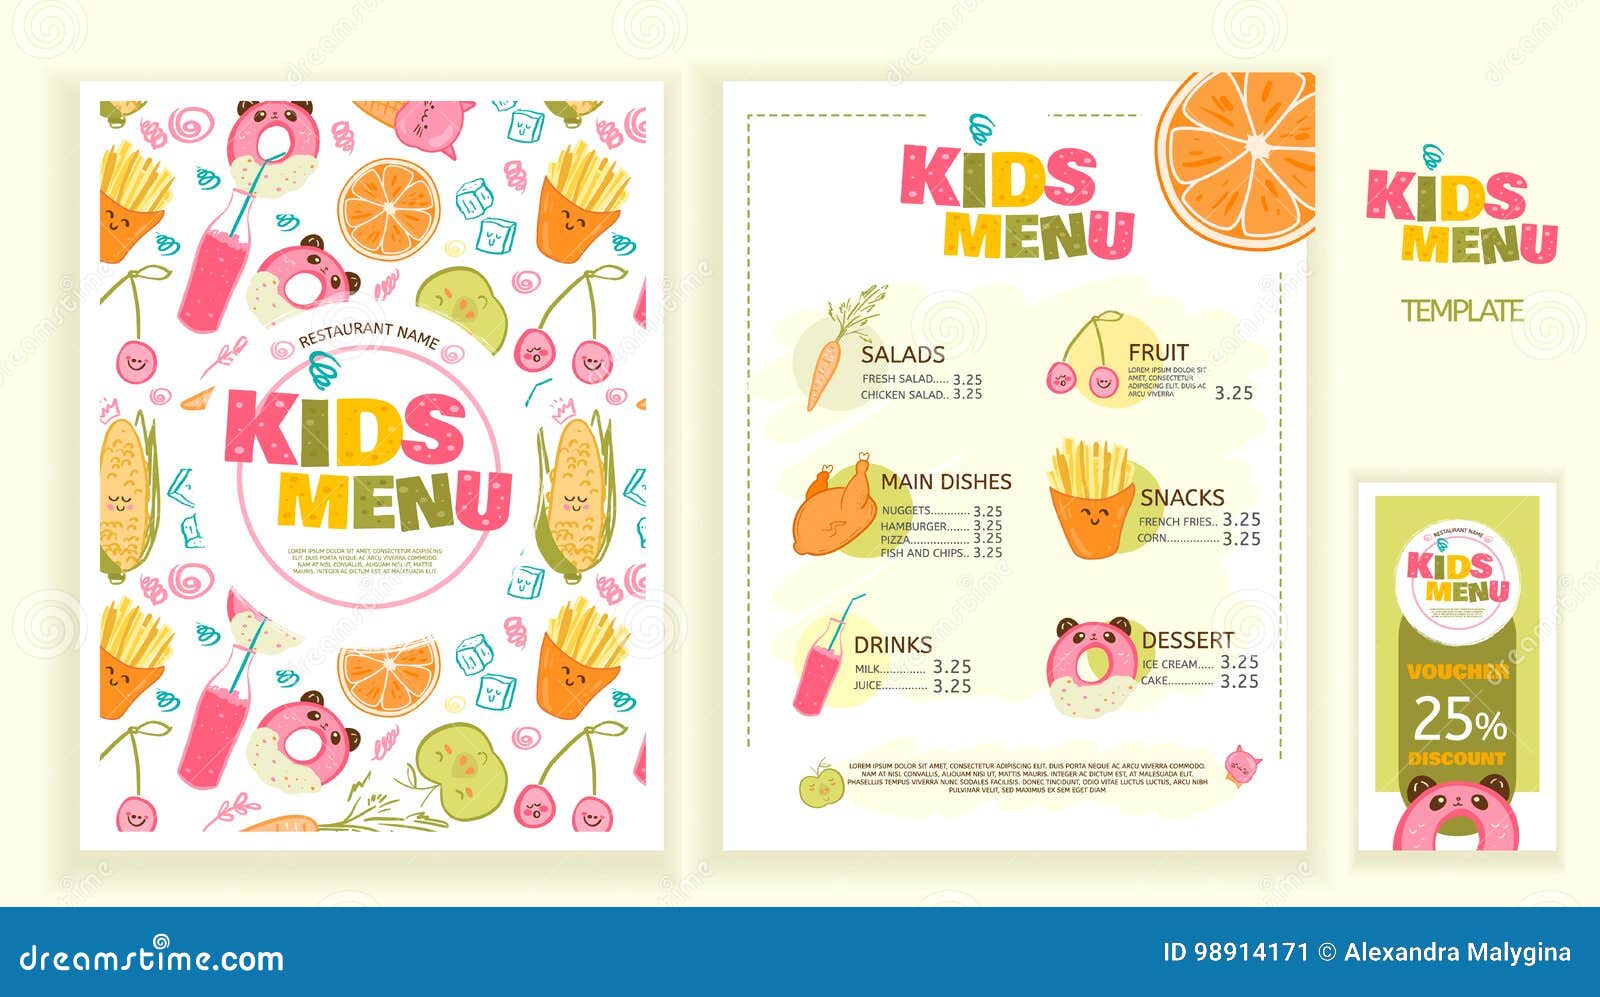 Название шаблона fun template. Kids menu шаблон. Дизайн меню для детского кафе. Menu for Kids шаблон. Меню детское макет вектор.